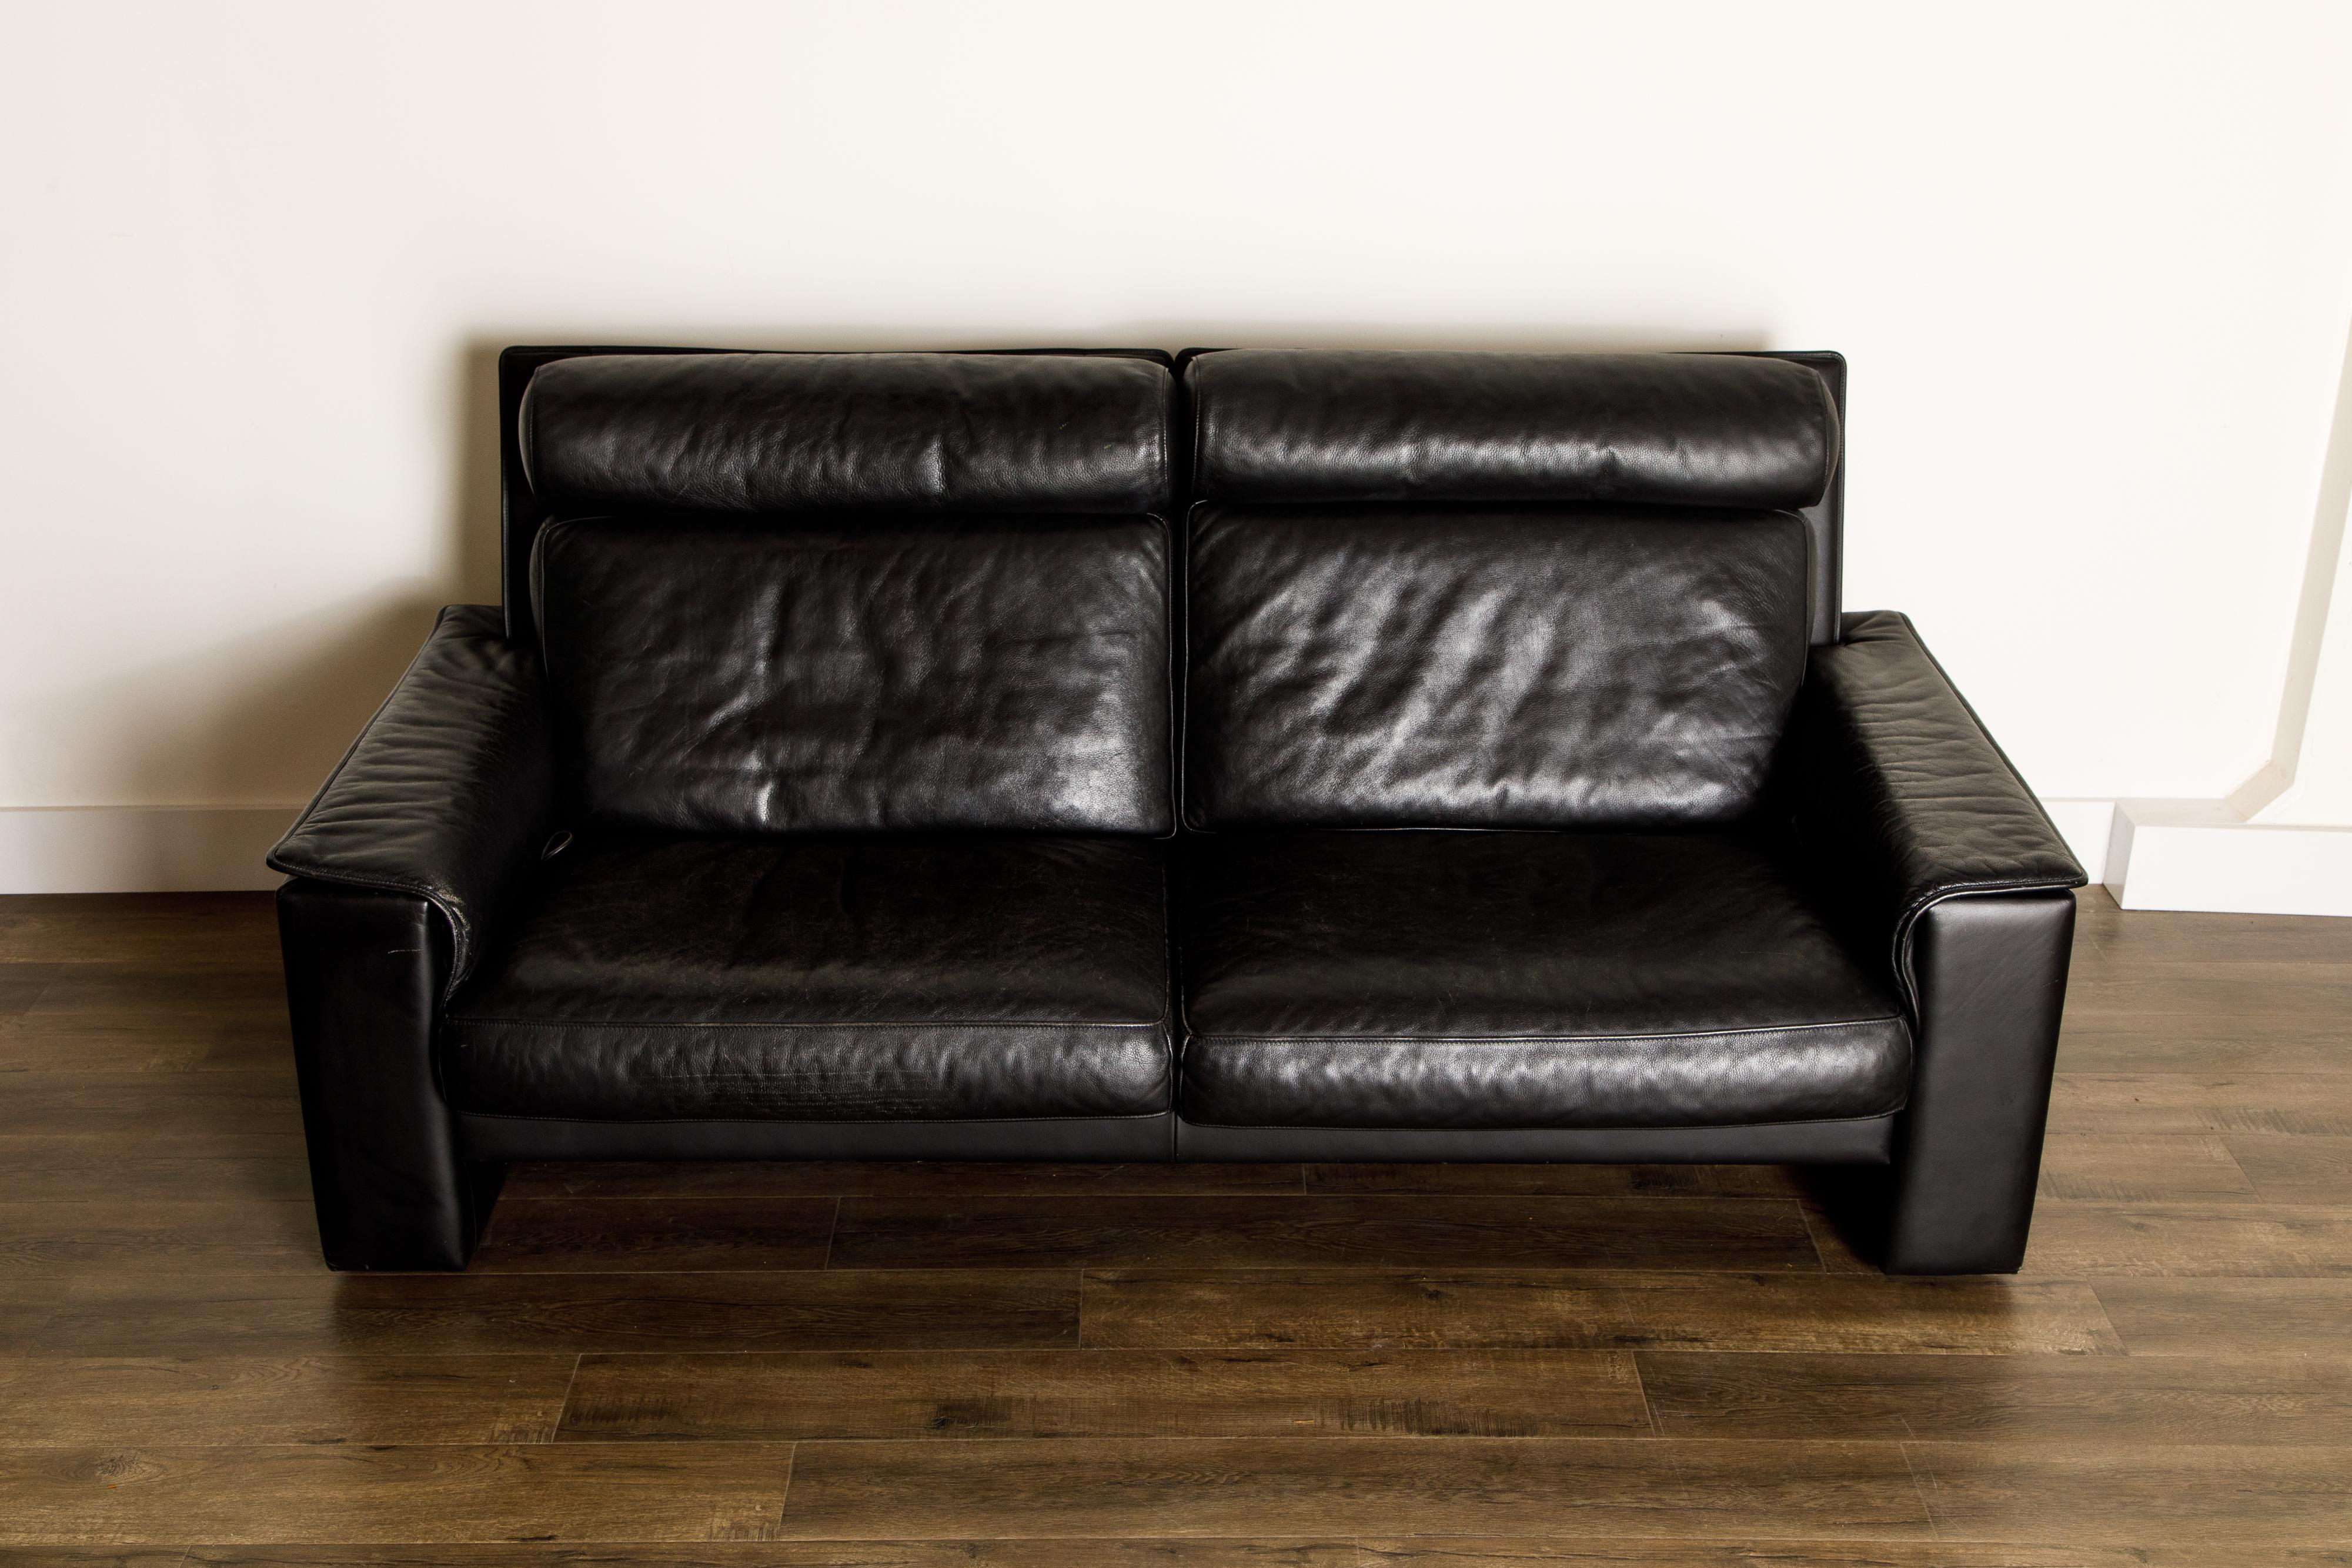 Scandinavian Modern De Sede Aged Black Leather Recliner Loveseat Sofa, 1970s Switzerland, Signed